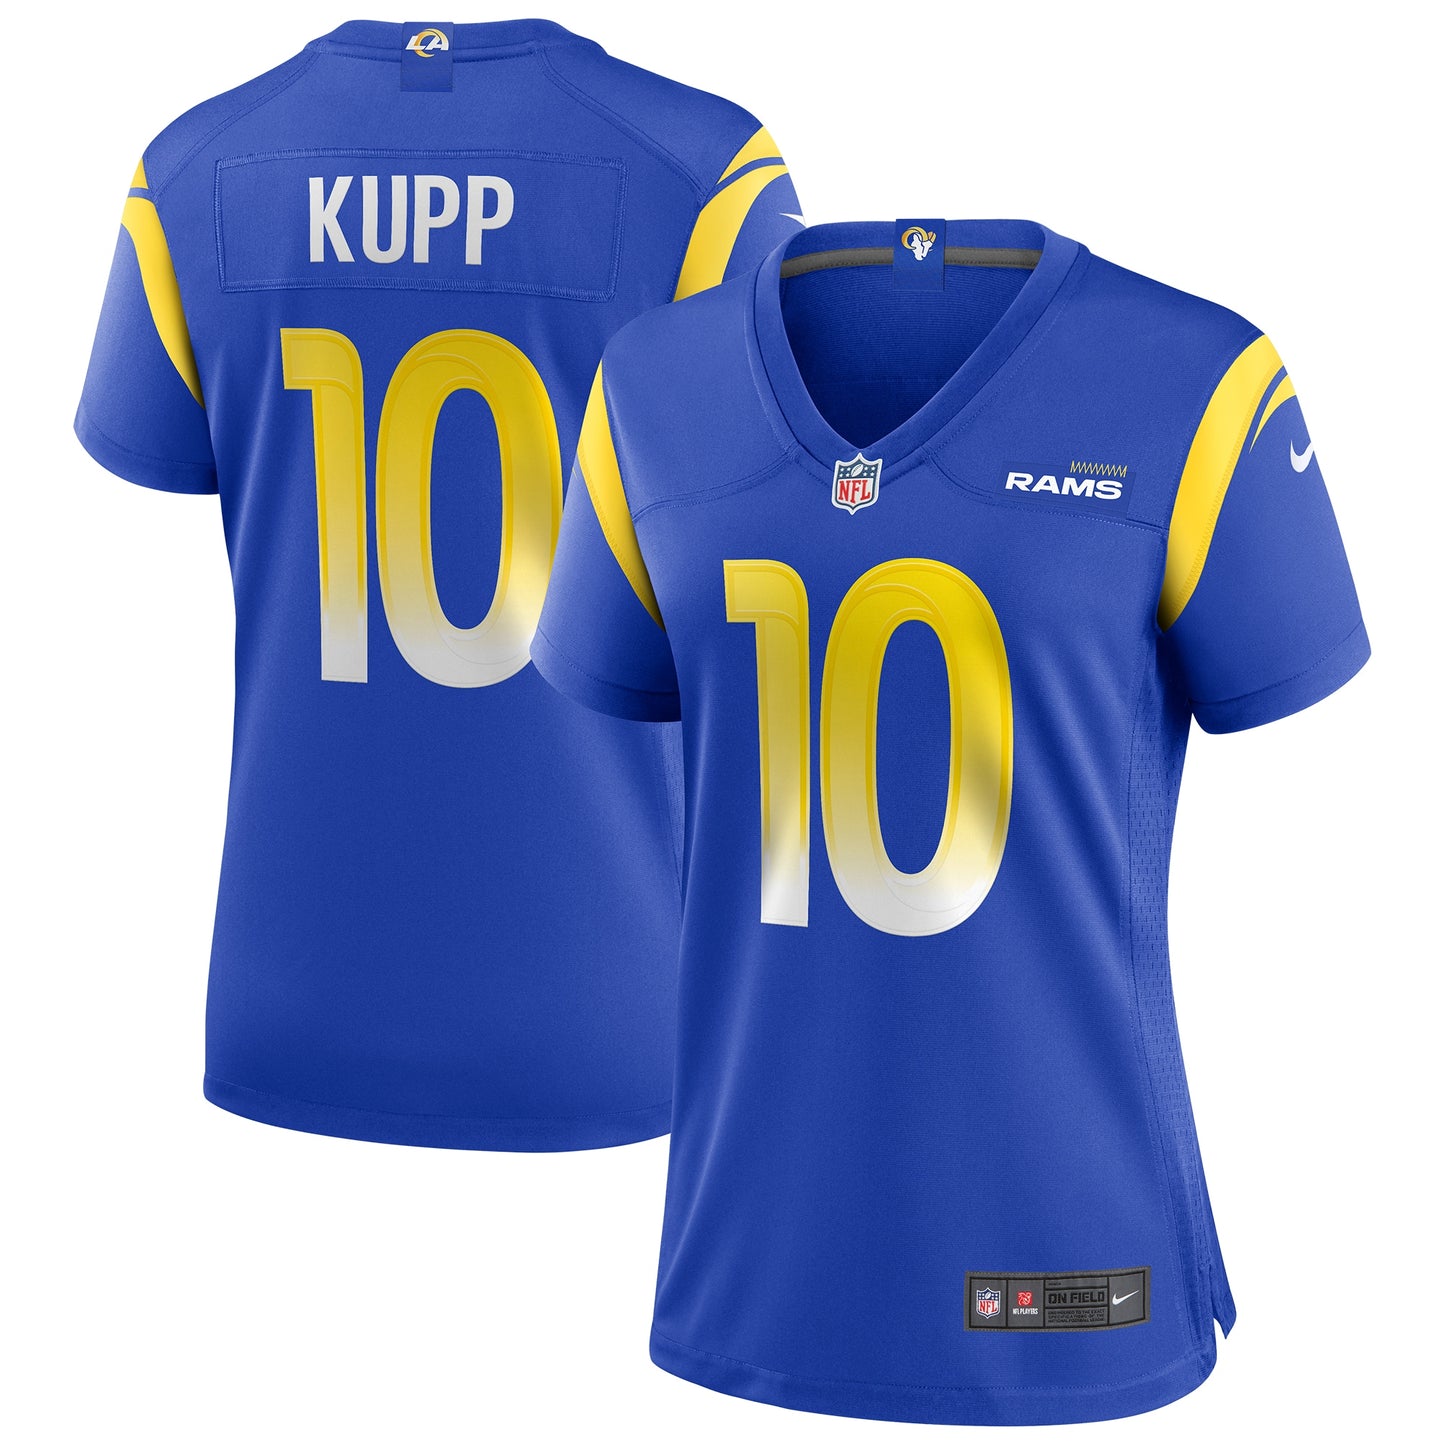 Cooper Kupp Los Angeles Rams Nike Women's Player Jersey - Royal